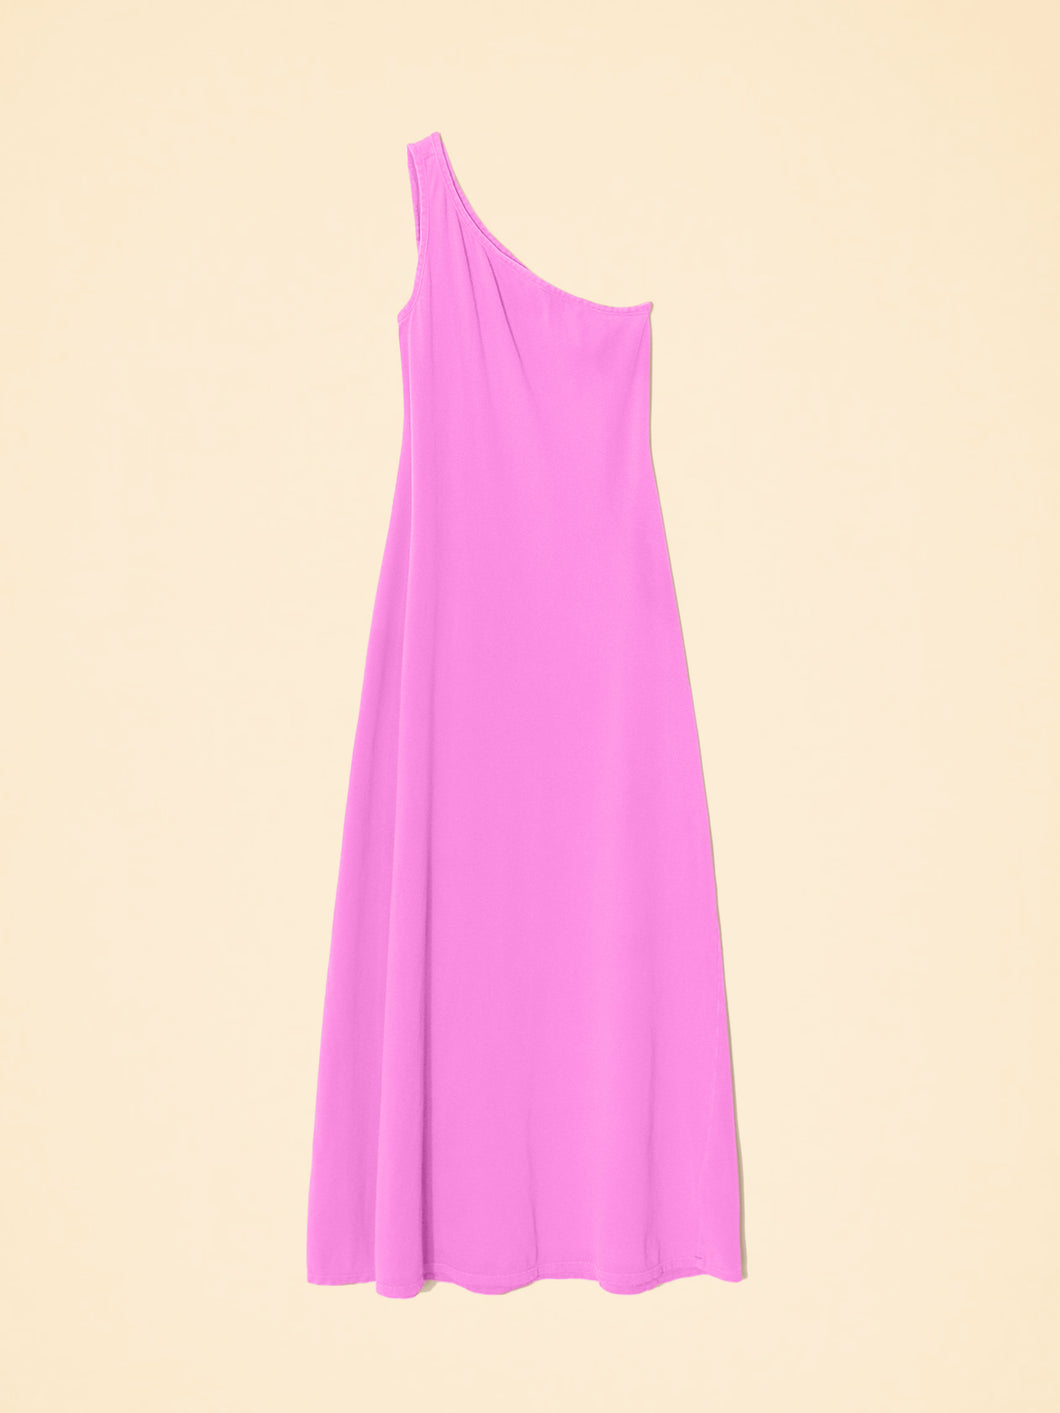 Genevieve Dress in Purple Plum